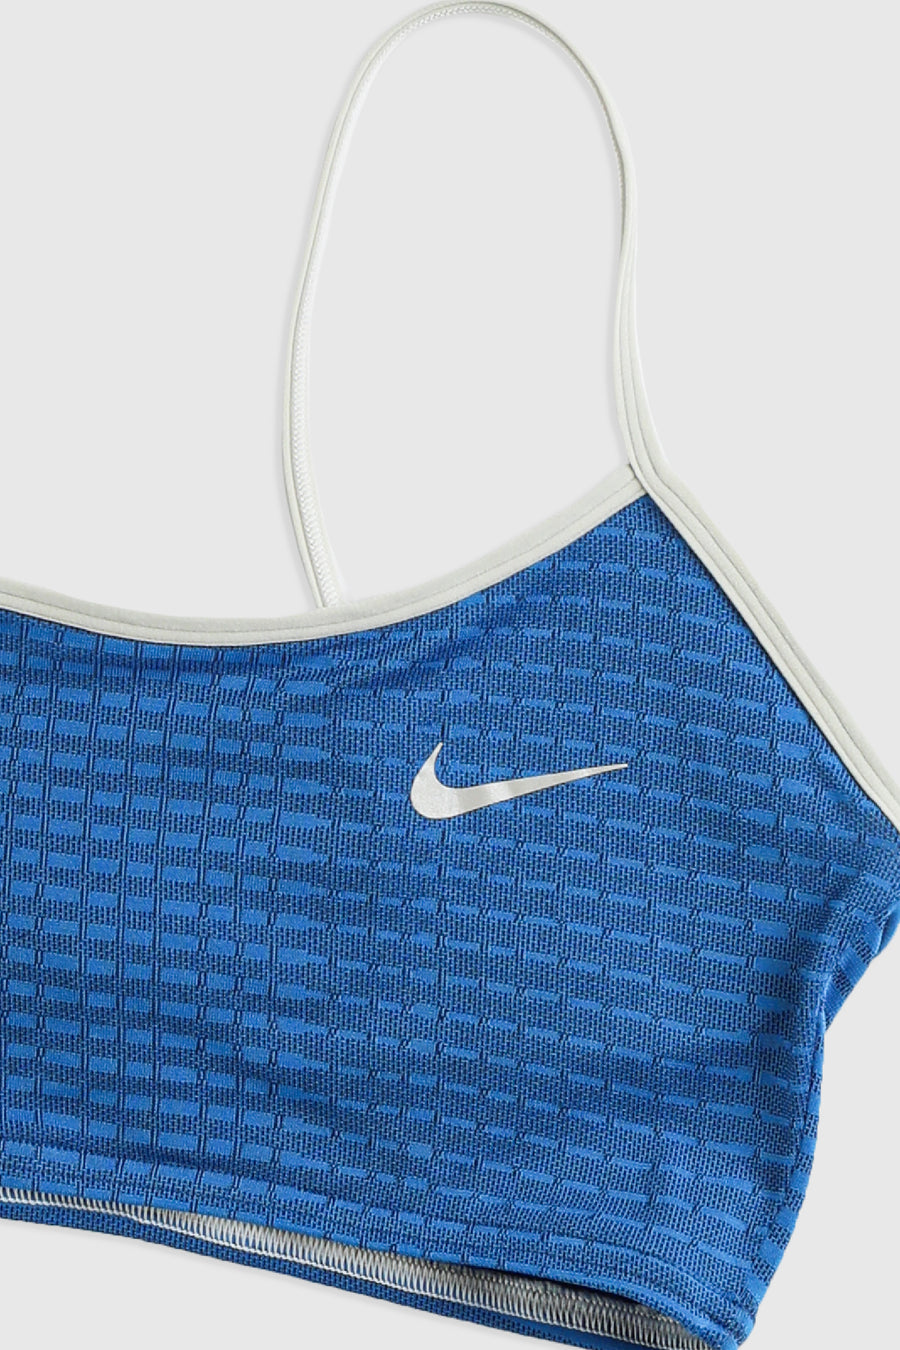 Rework Nike Athletic Bra Top - L